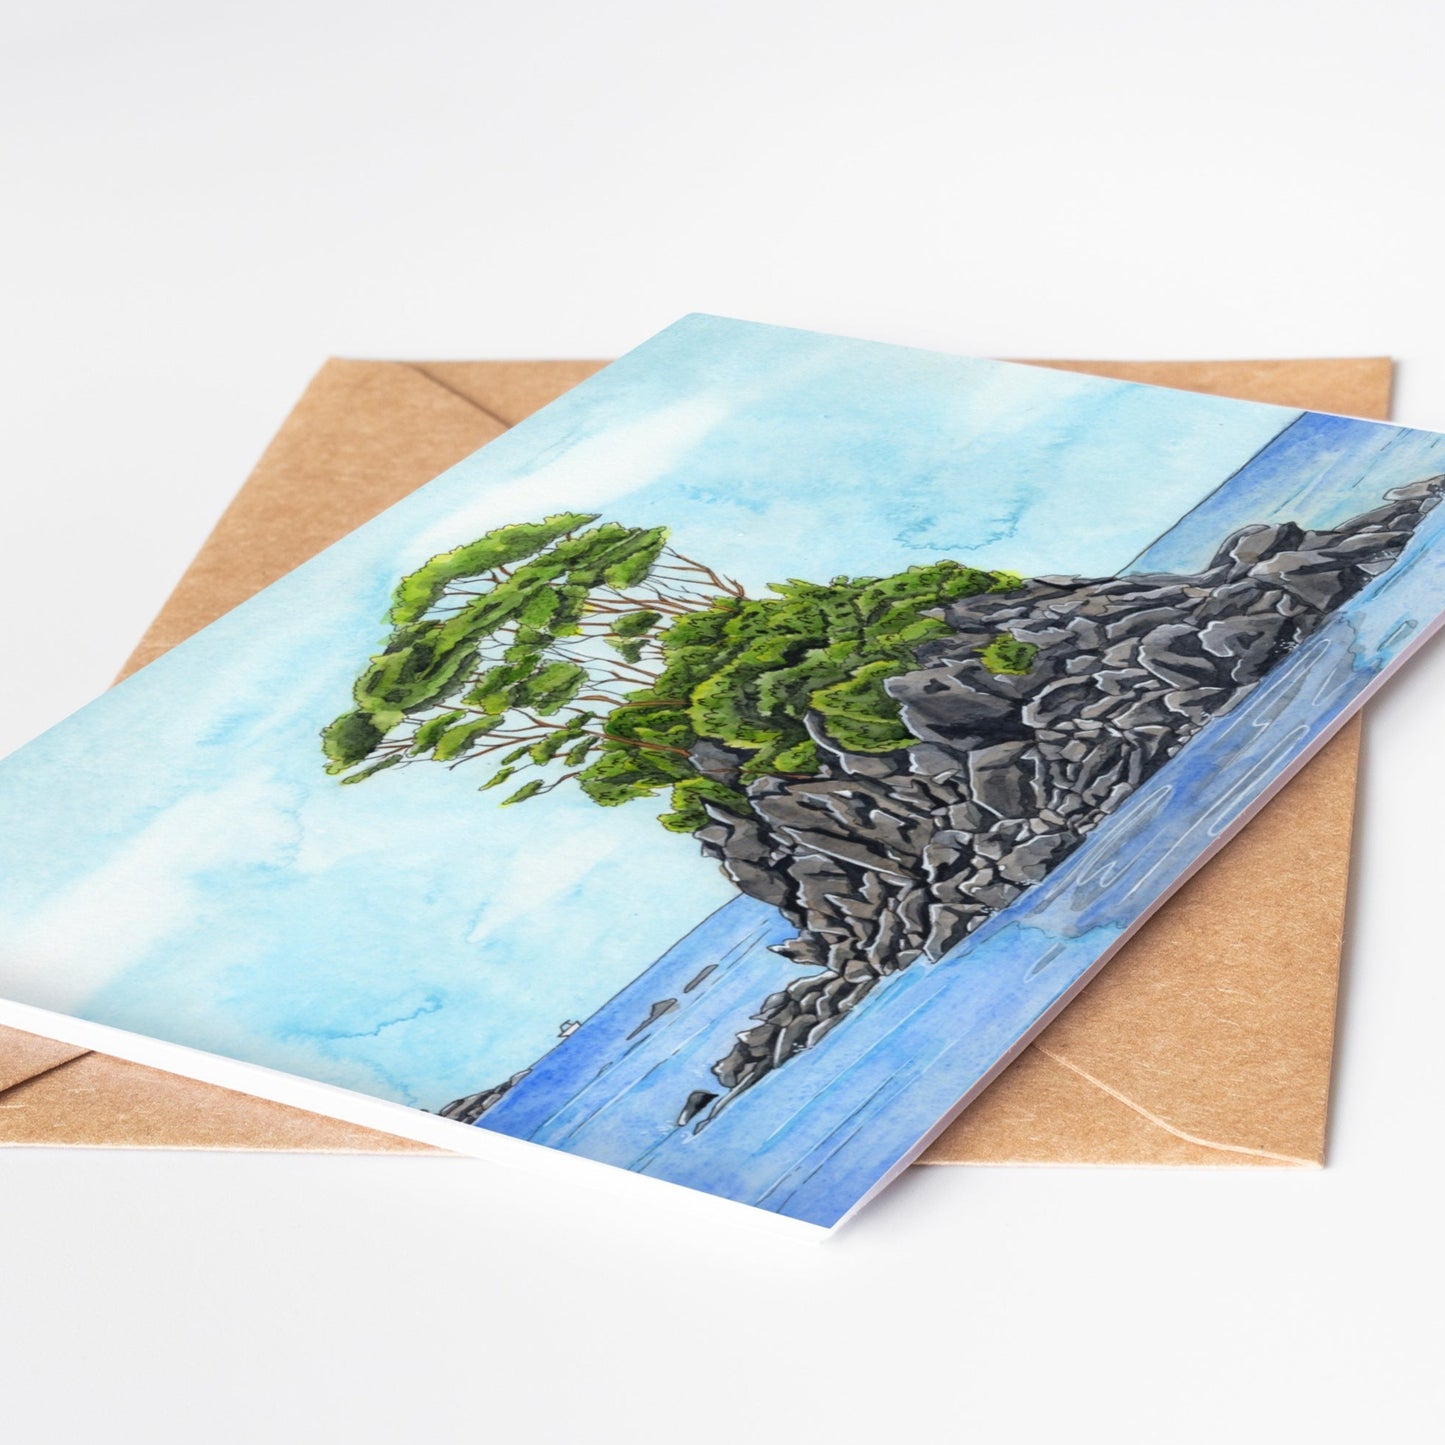 Greeting card by artist Leah Ingram featuring the Abel Tasman Rocks.